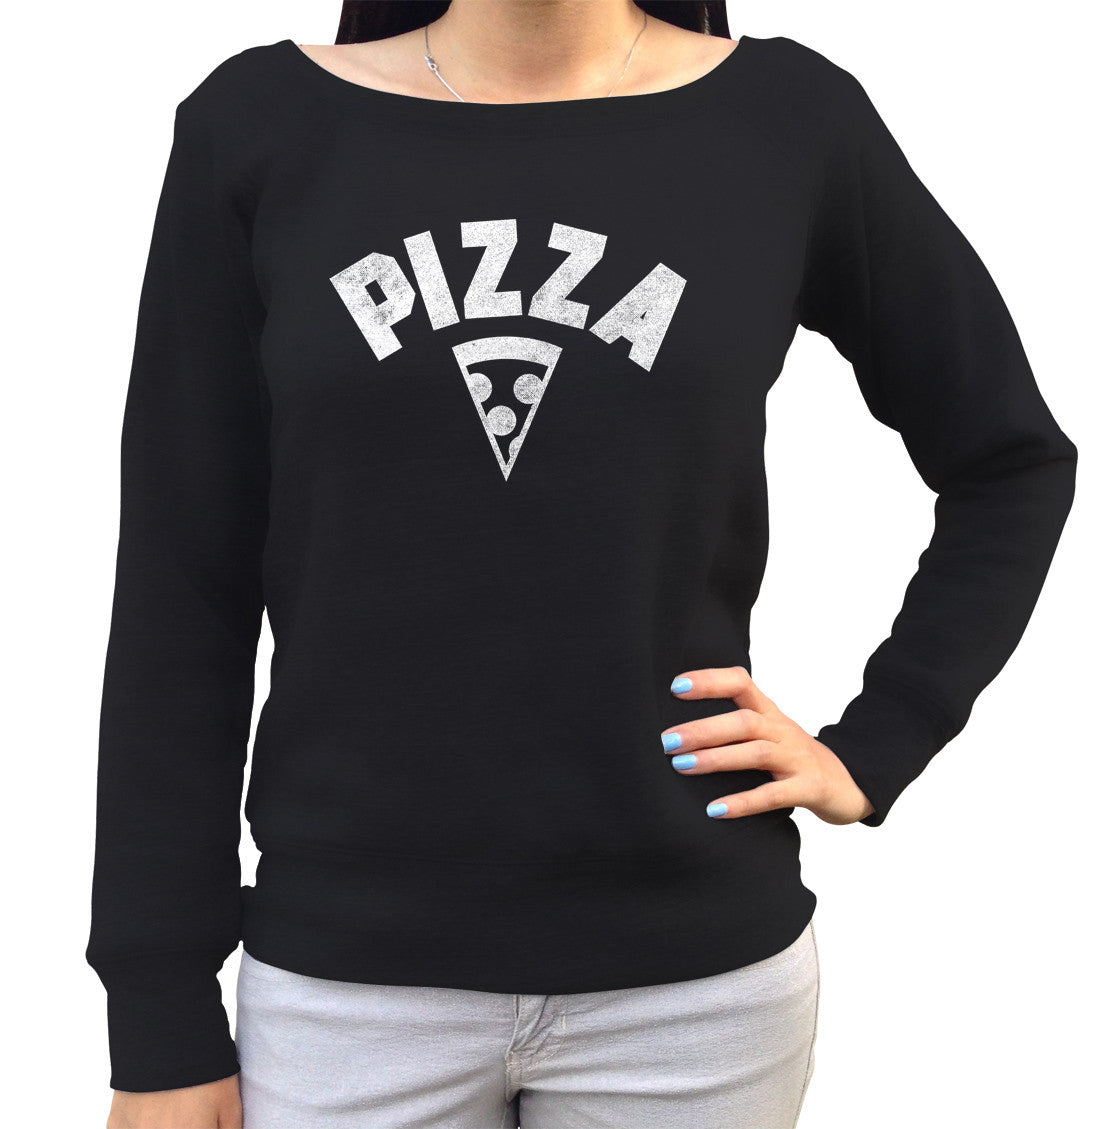 Women's Team Pizza Scoop Neck Fleece Vintage Retro Athletic Logo Inspired